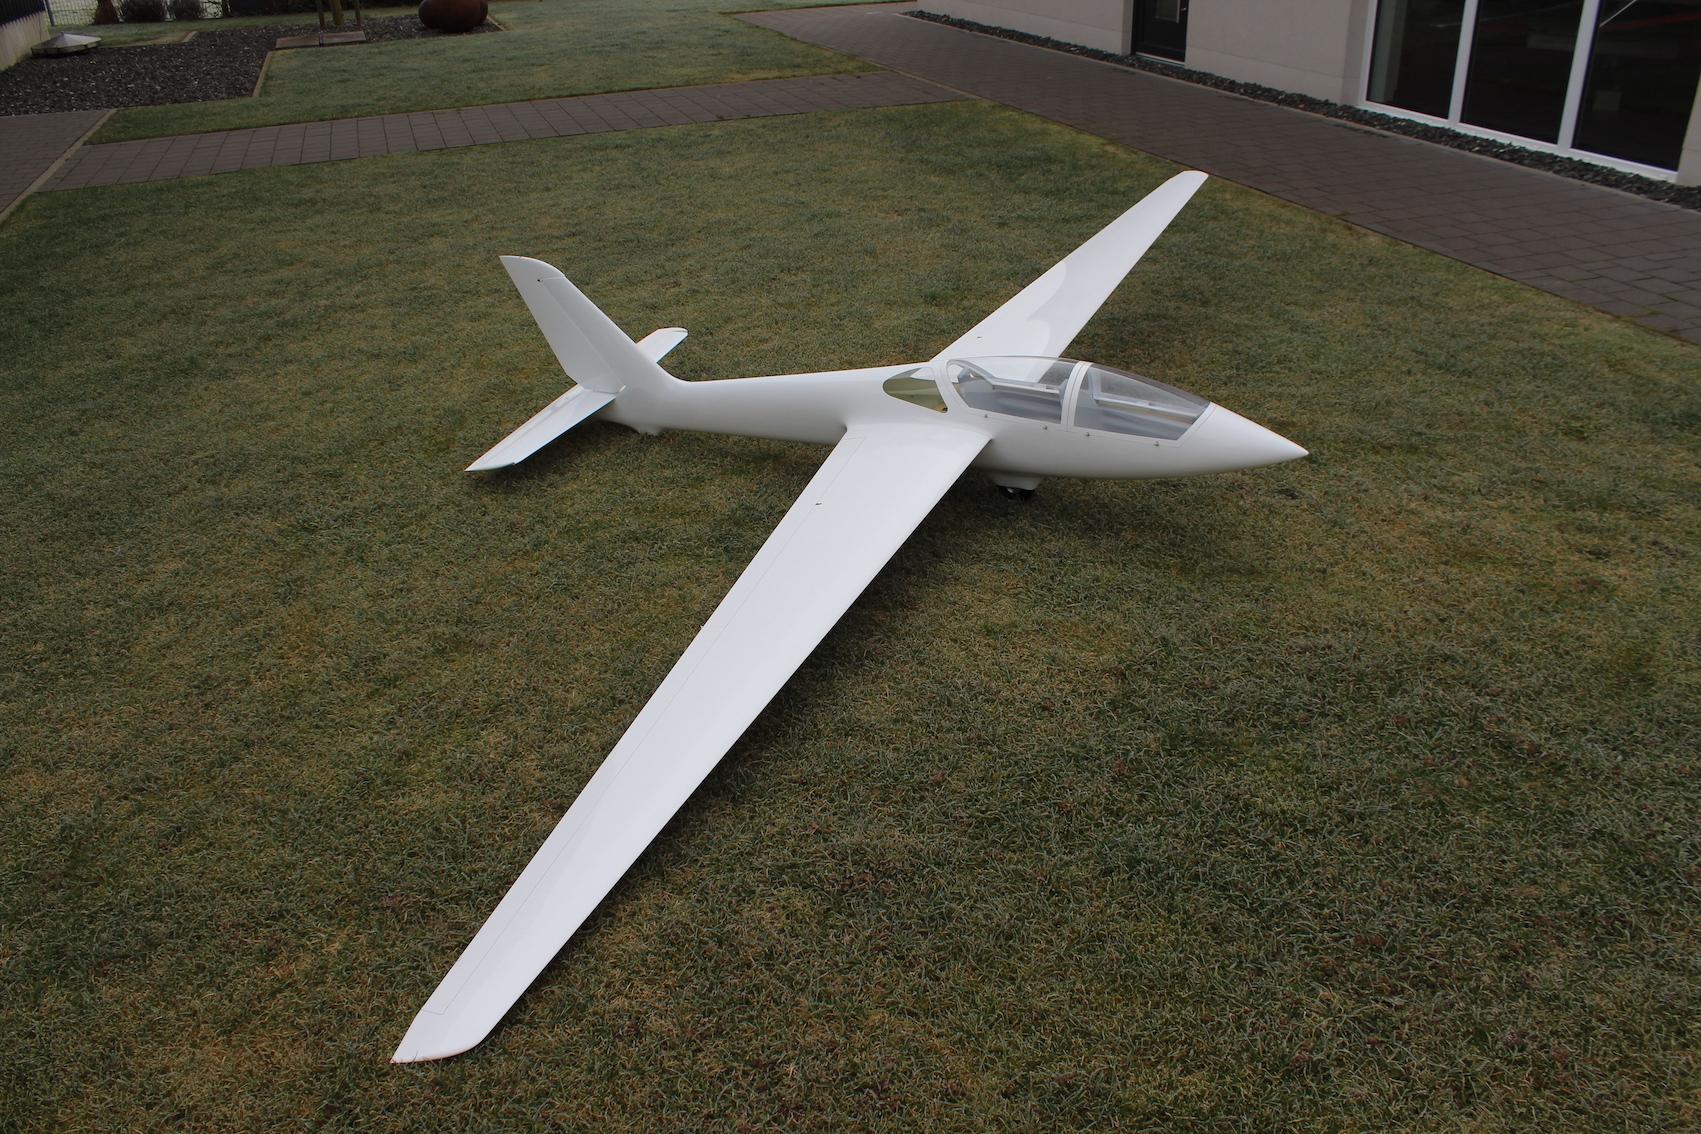 Fox Rc Glider: Performance-Enhancing Design